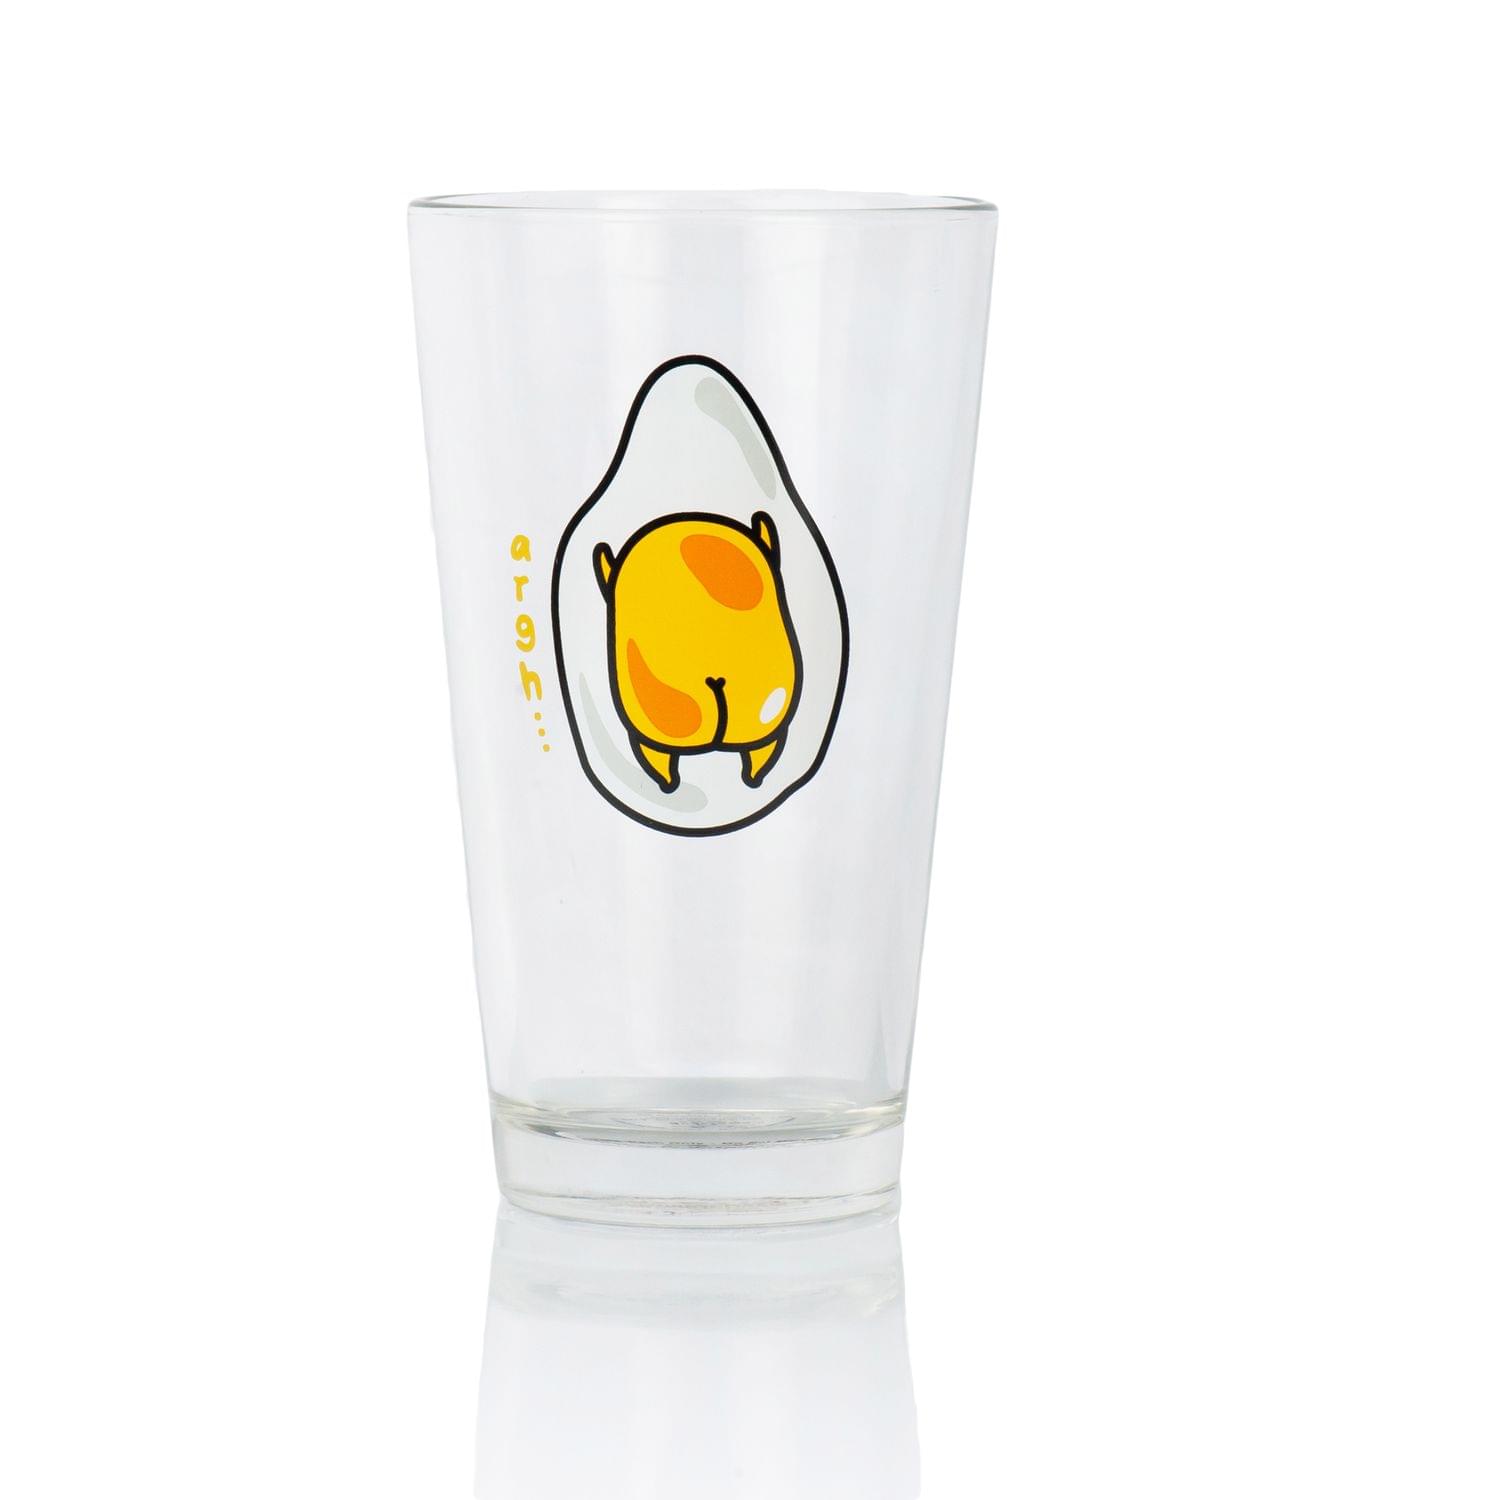 OFFICIAL Gudetama Lazy Egg Glass | Feat. Gudetama Laying Face Down | 16 Oz. Cup